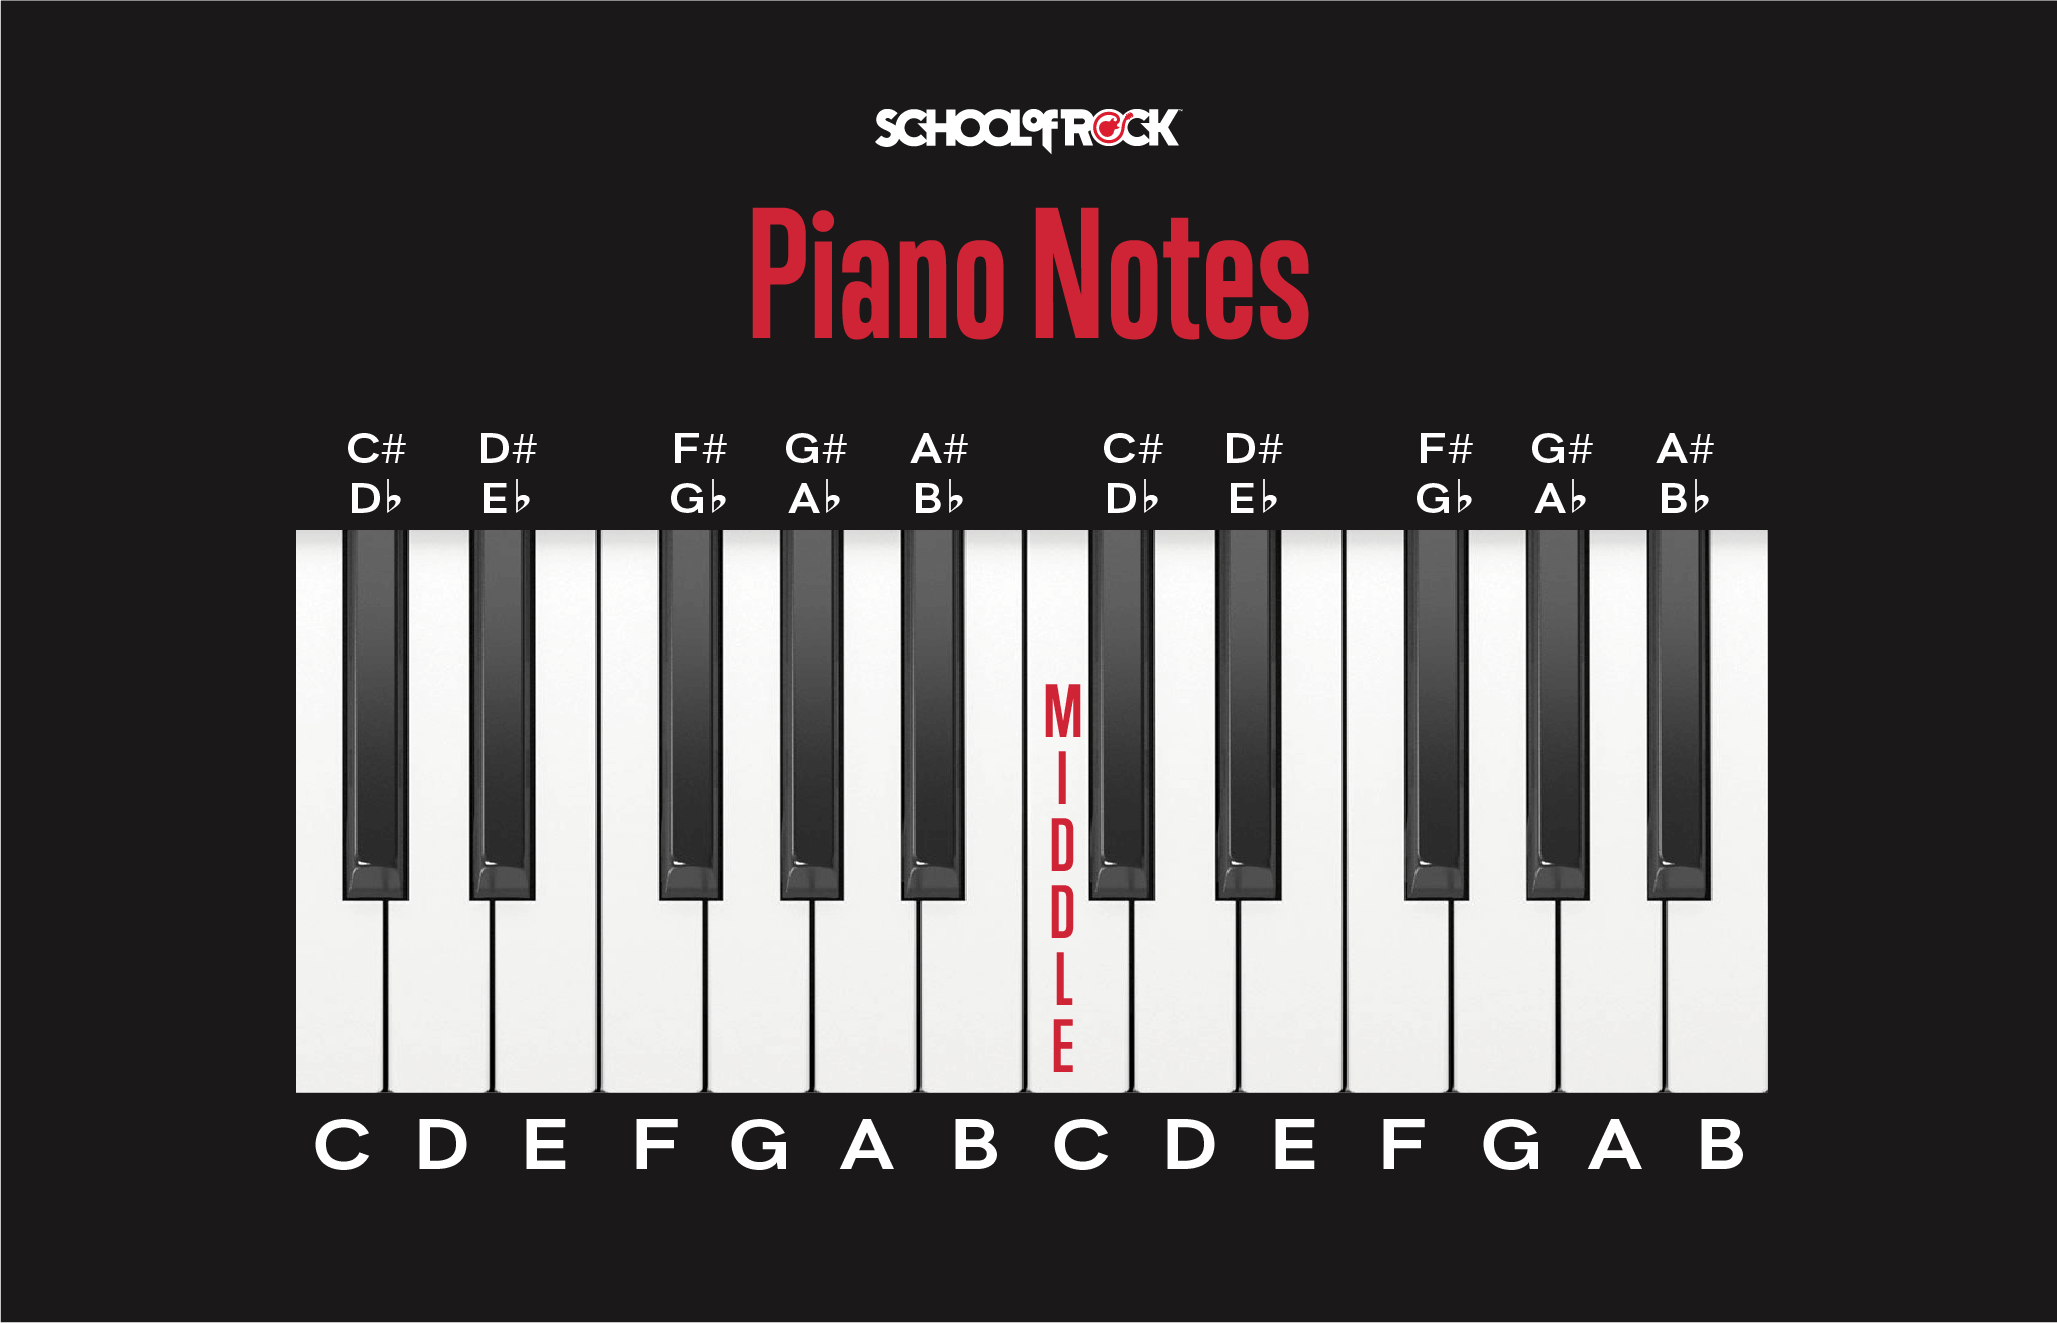 Piano notes chart